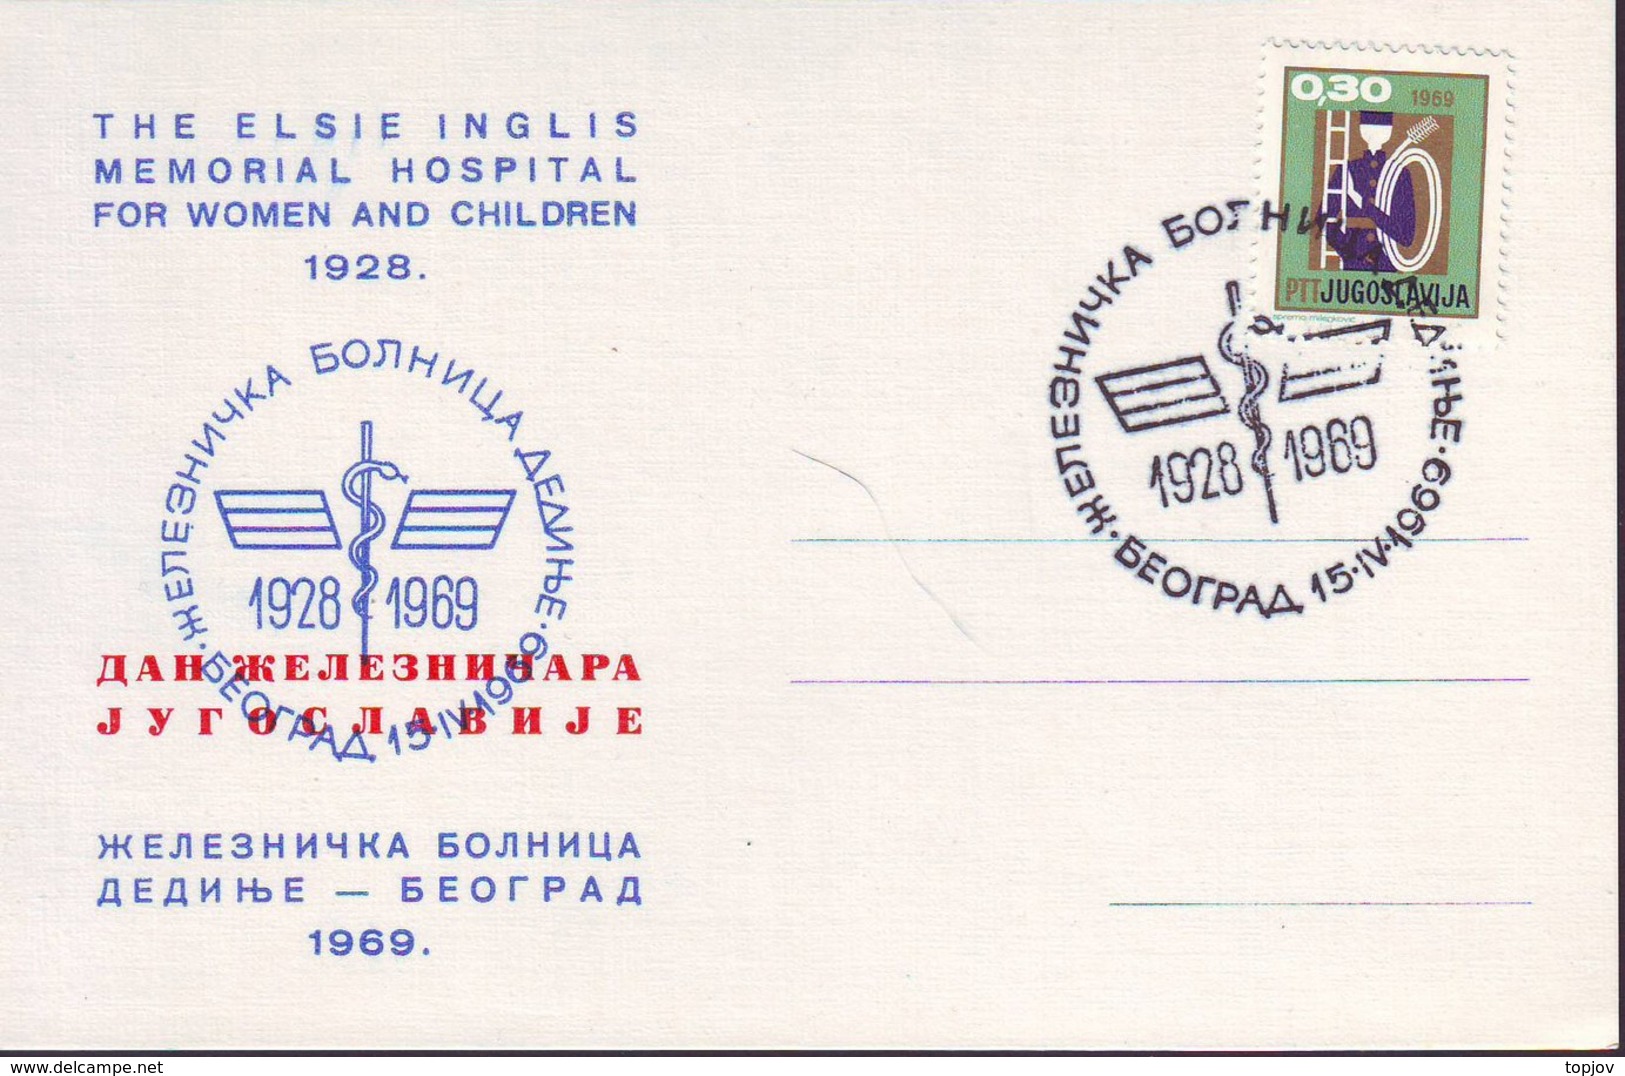 YUGOSLAVIA  - JUGOSLAVIA  - MEMORIAL HOSPITAL FOR WOMEN AND CHILDREN 1928 - BEOGRAD - 1969 - Pollution